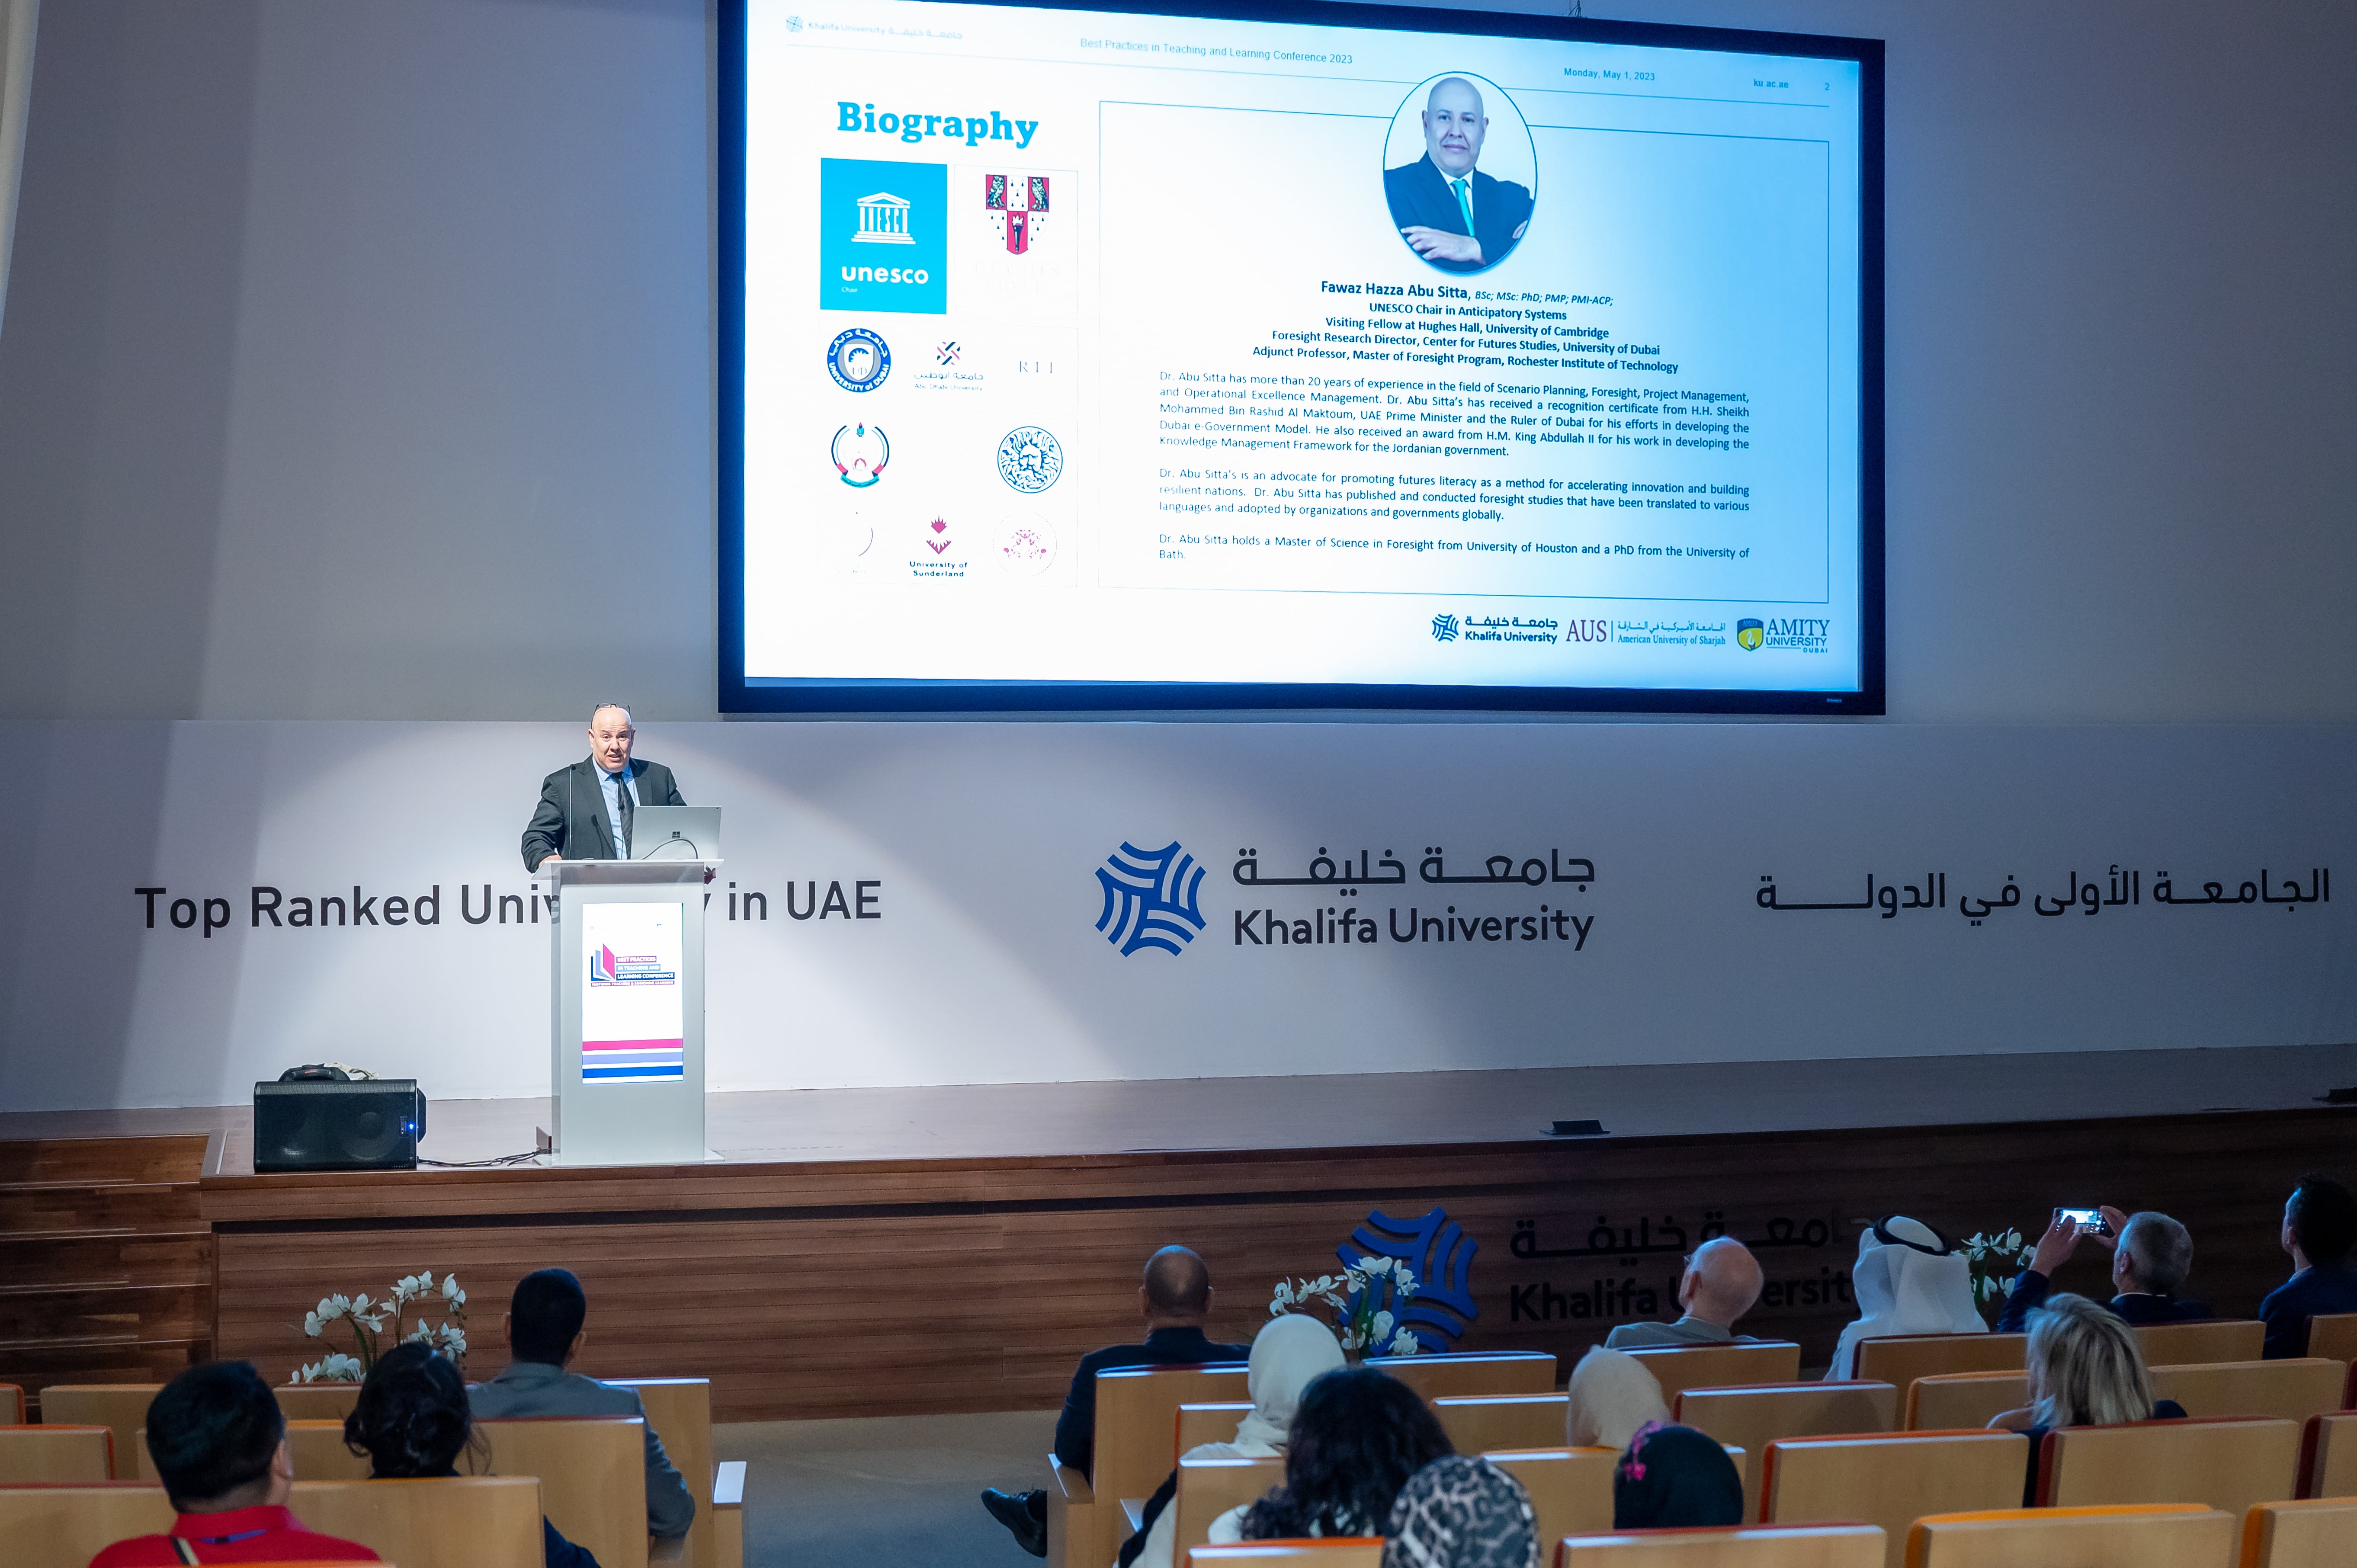 Khalifa University, American University of Sharjah, and Amity University Dubai to Individually Focus on Themes Relevant to the Region